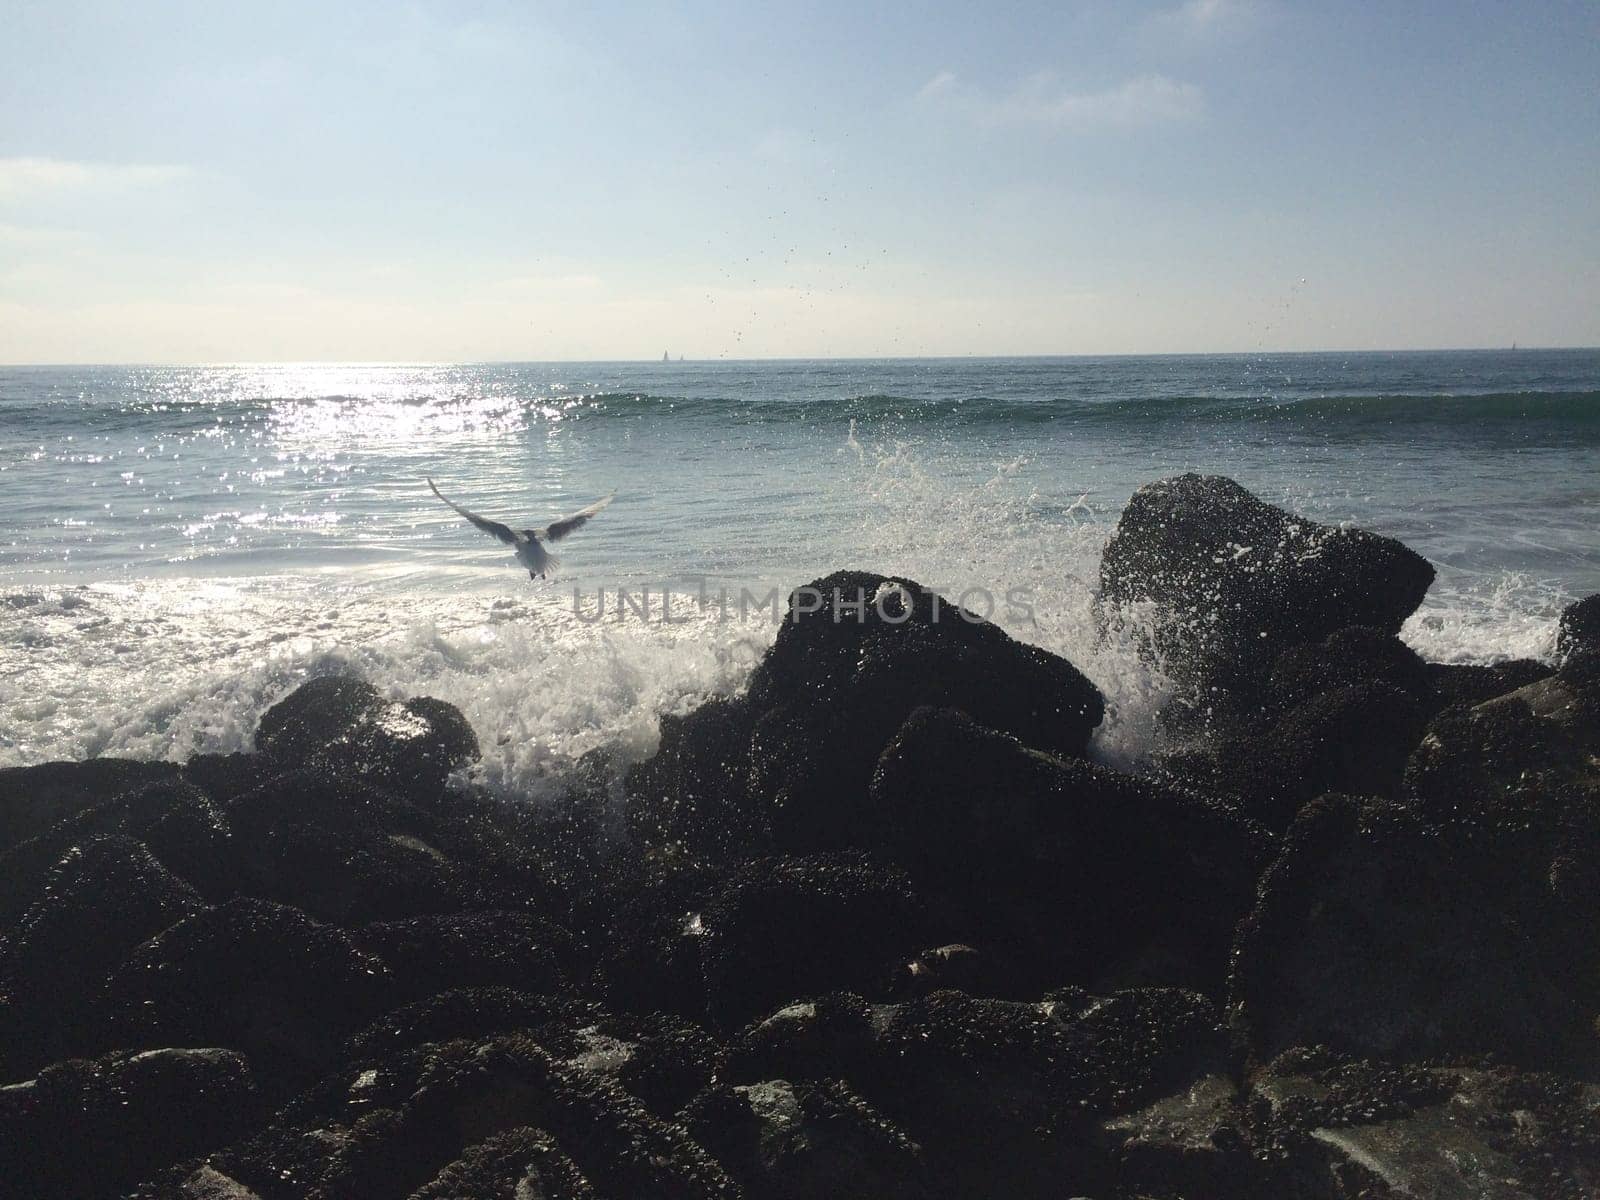 Bird Flying along Rocky Ocean Shore, Waves Crashing near Los Angeles. High quality photo